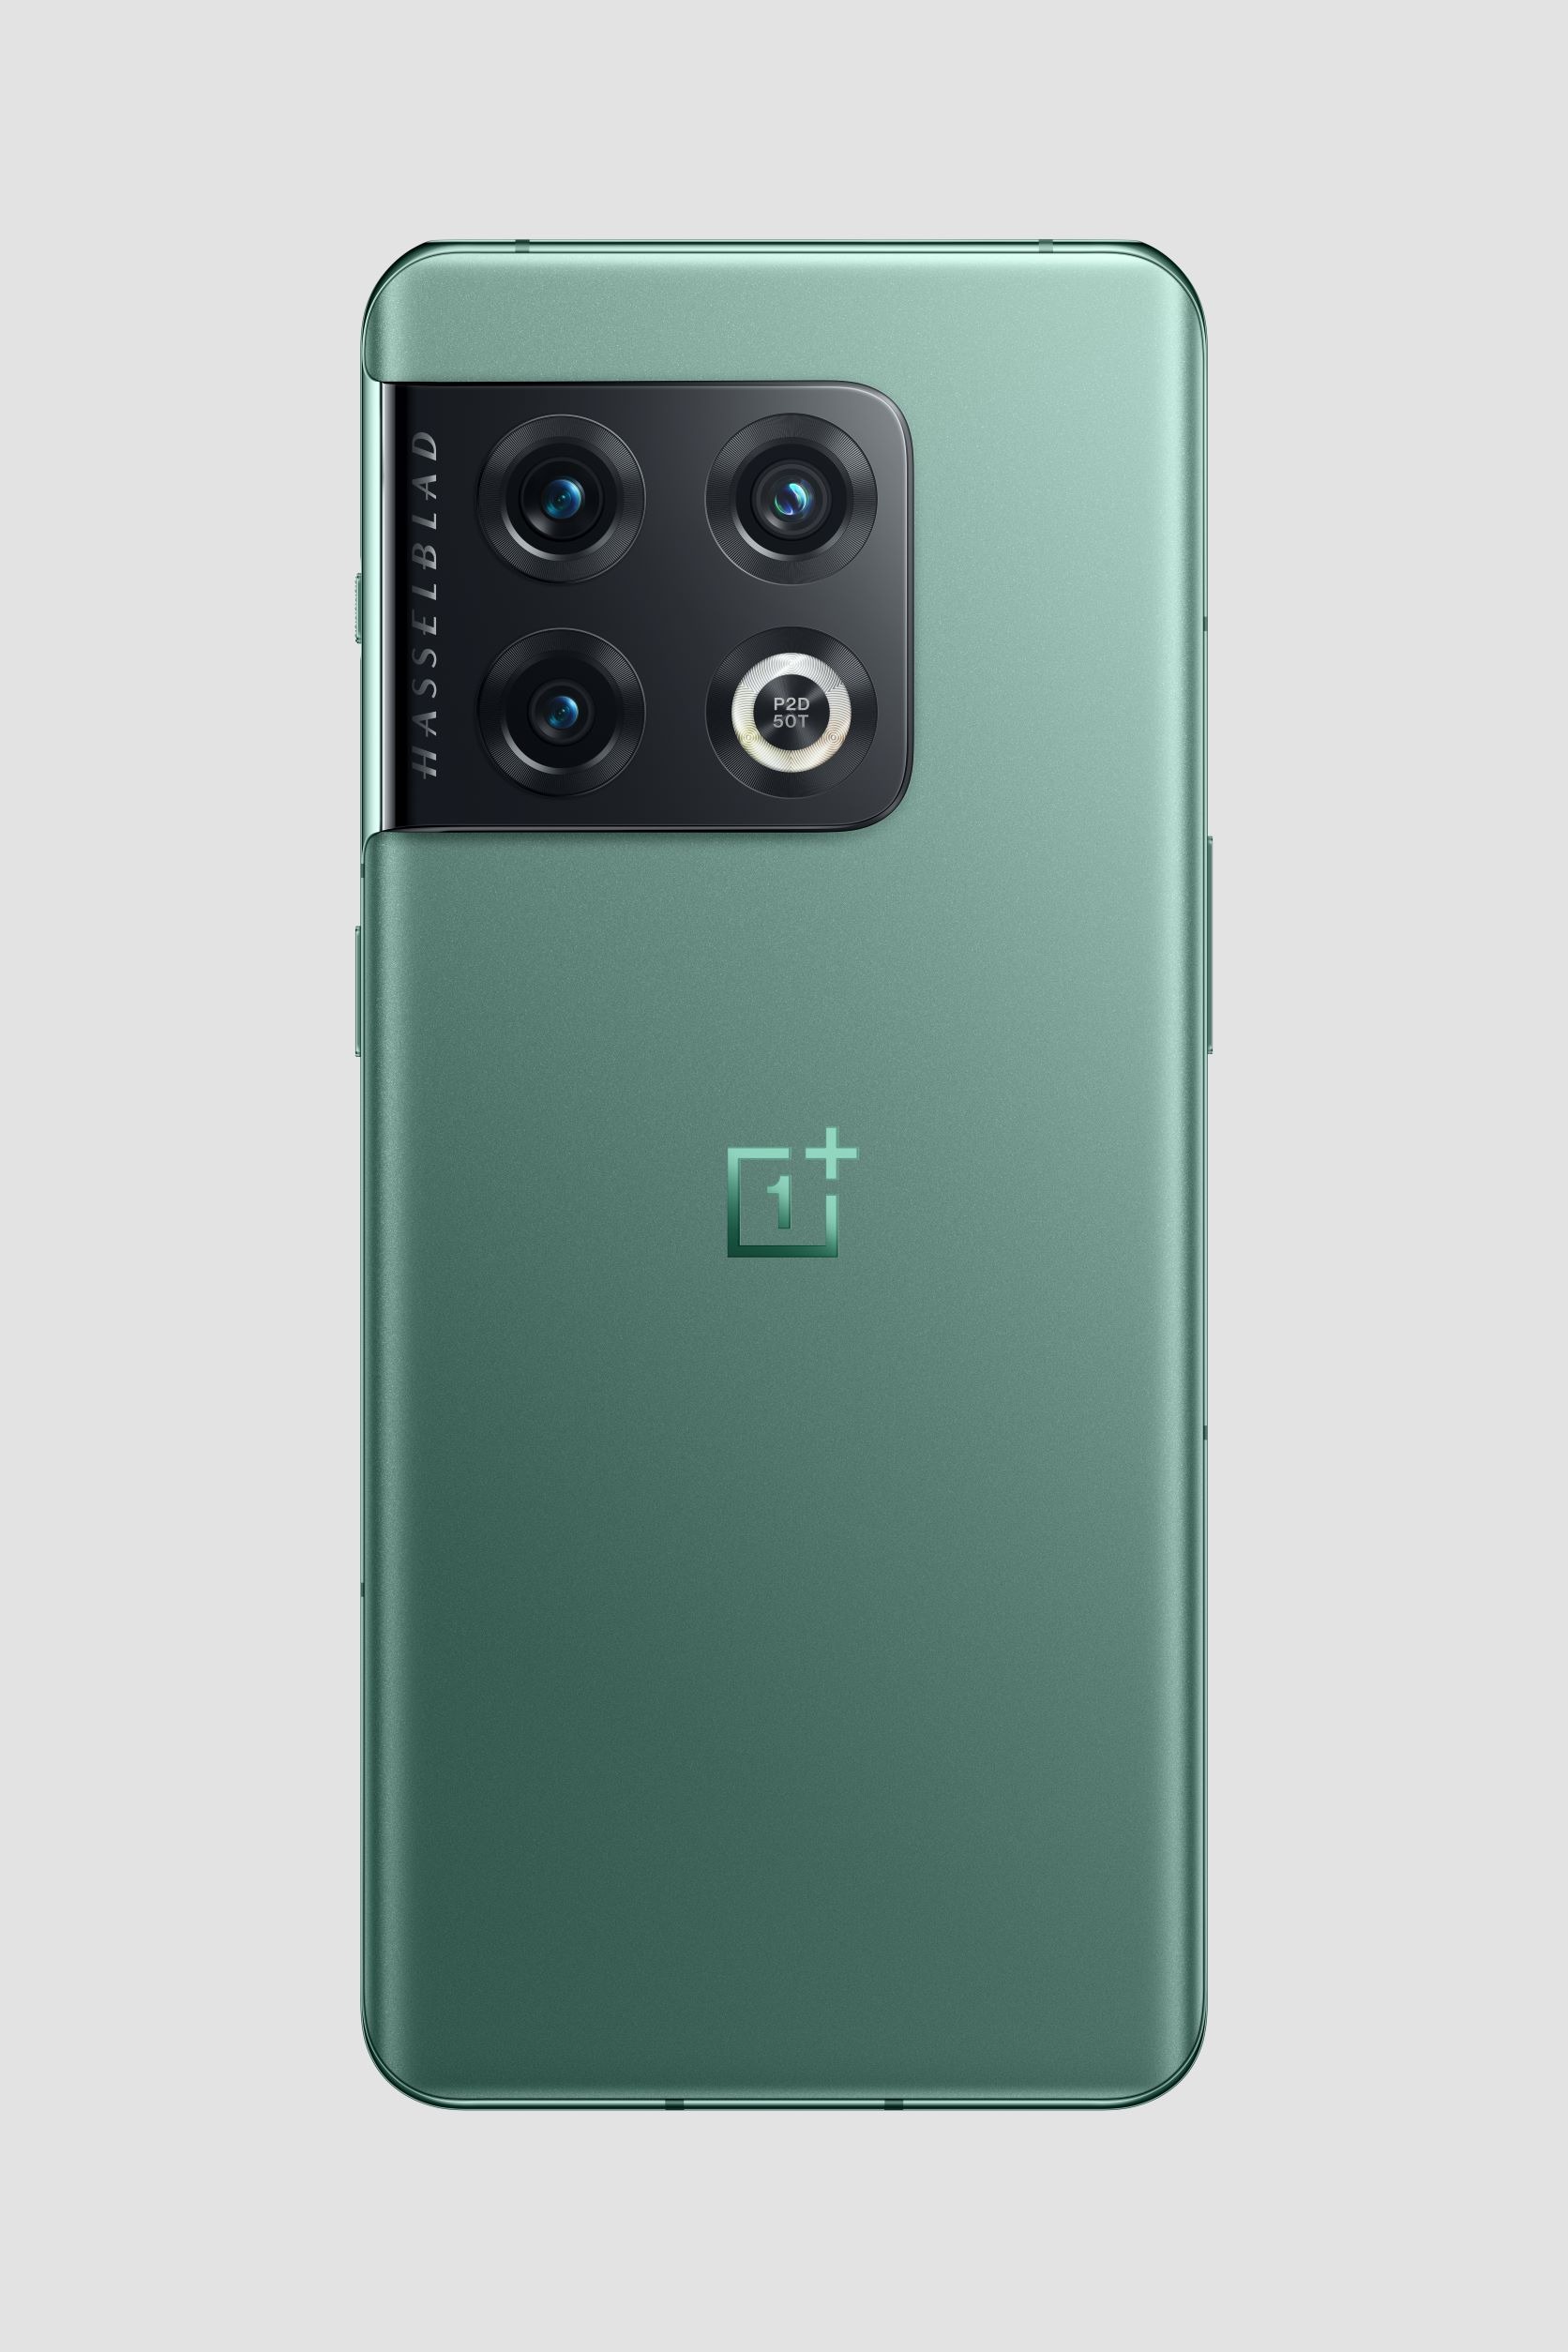 OnePlus 10 Pro Emerald Forest render 1